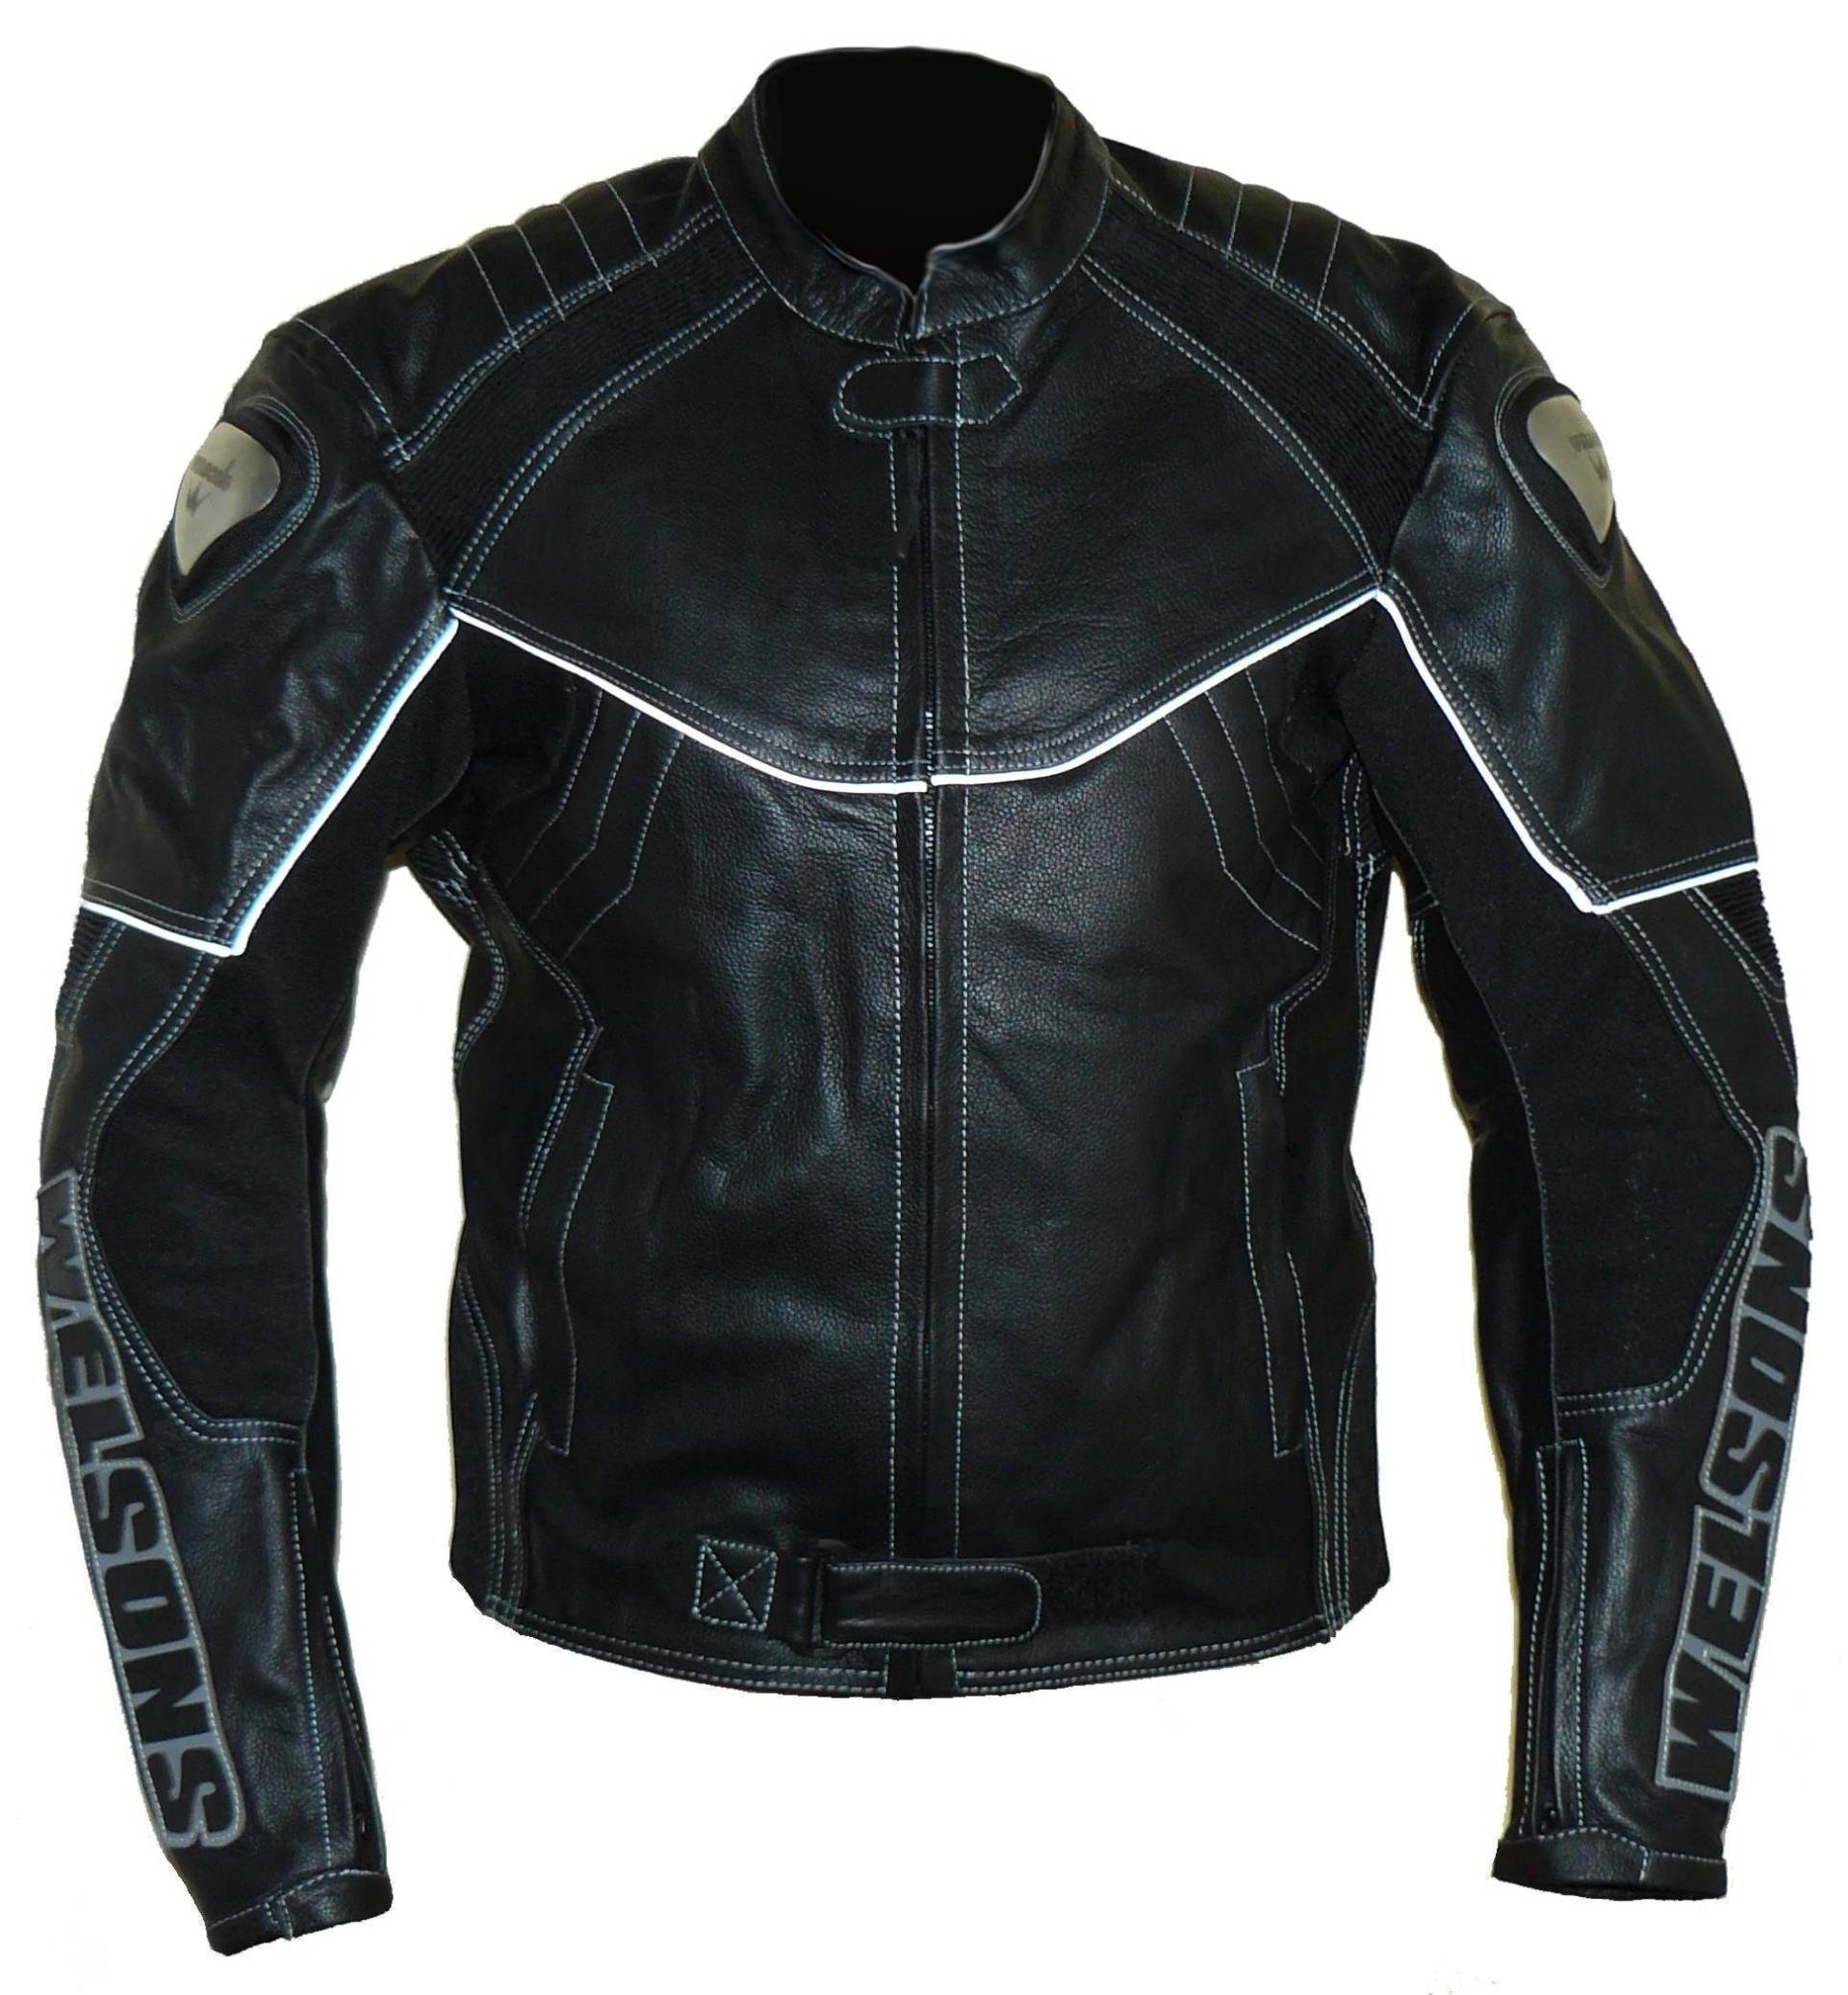 Protectwear WMB-303 Motorrad - Lederjacke,Größe : 56, schwarz von protectWEAR